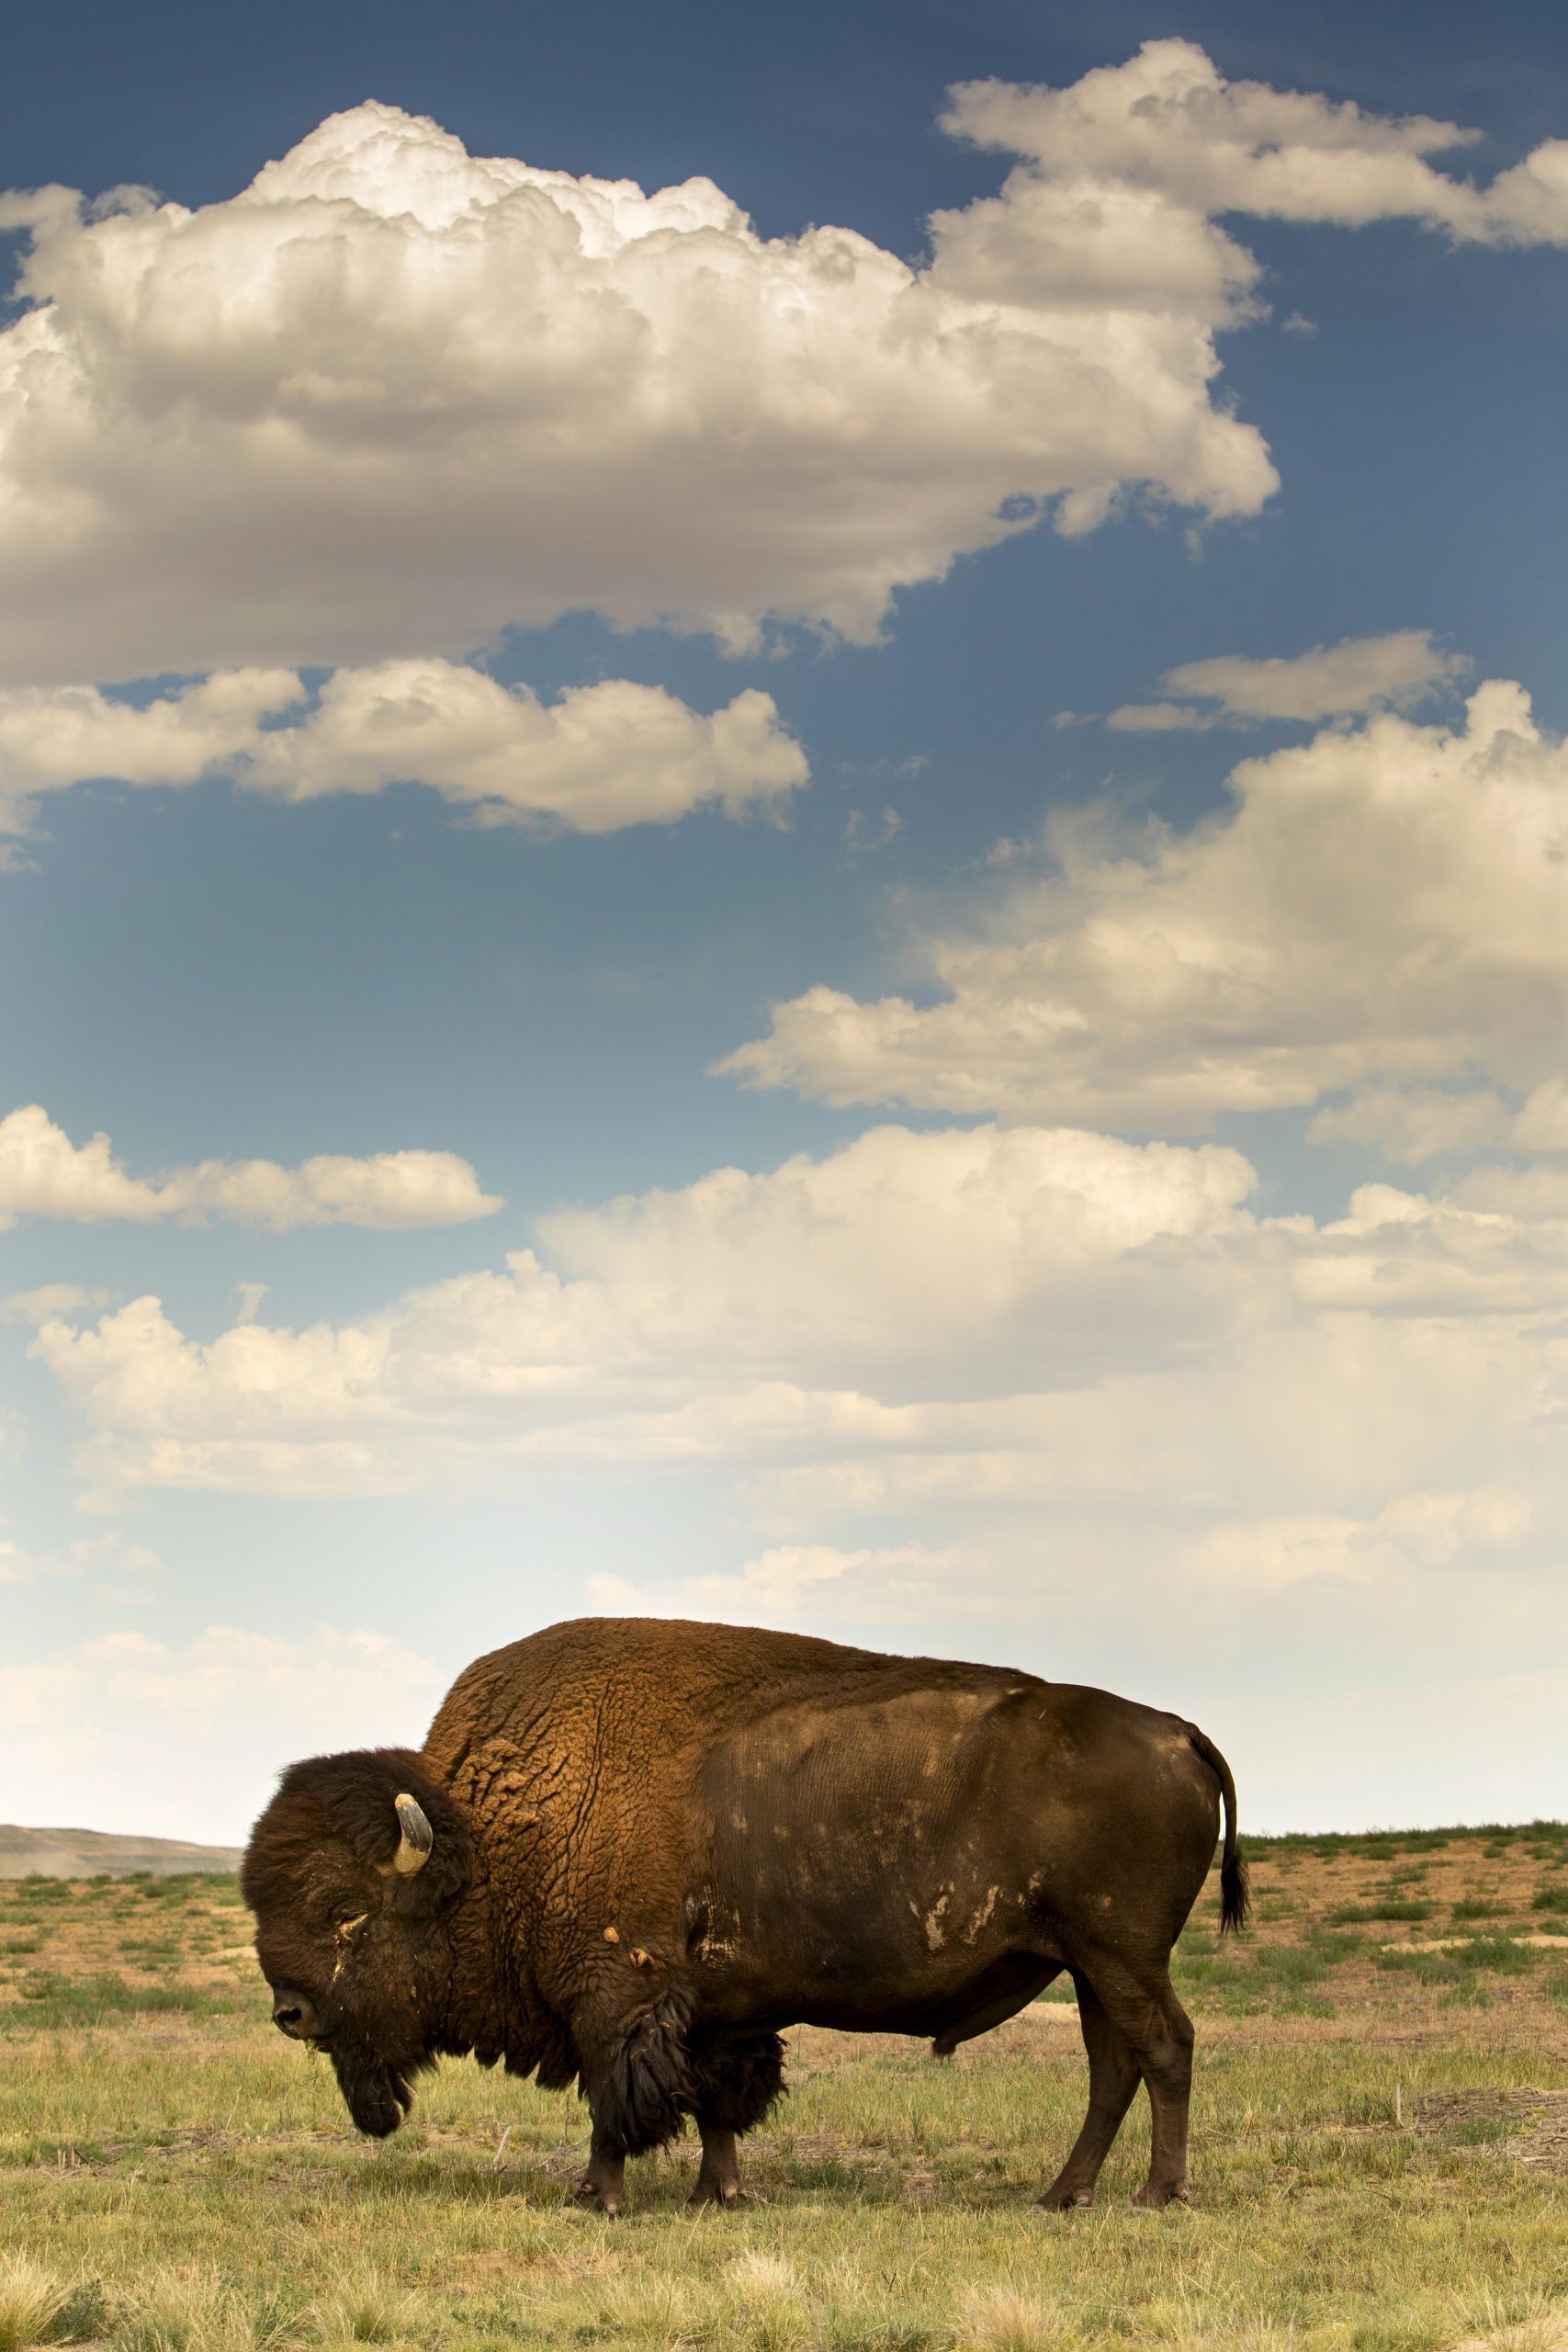 A buffalo at Rocky Mountain Arsenal National Wildlife Refuge, Colorado (Photo: Ian Shive)